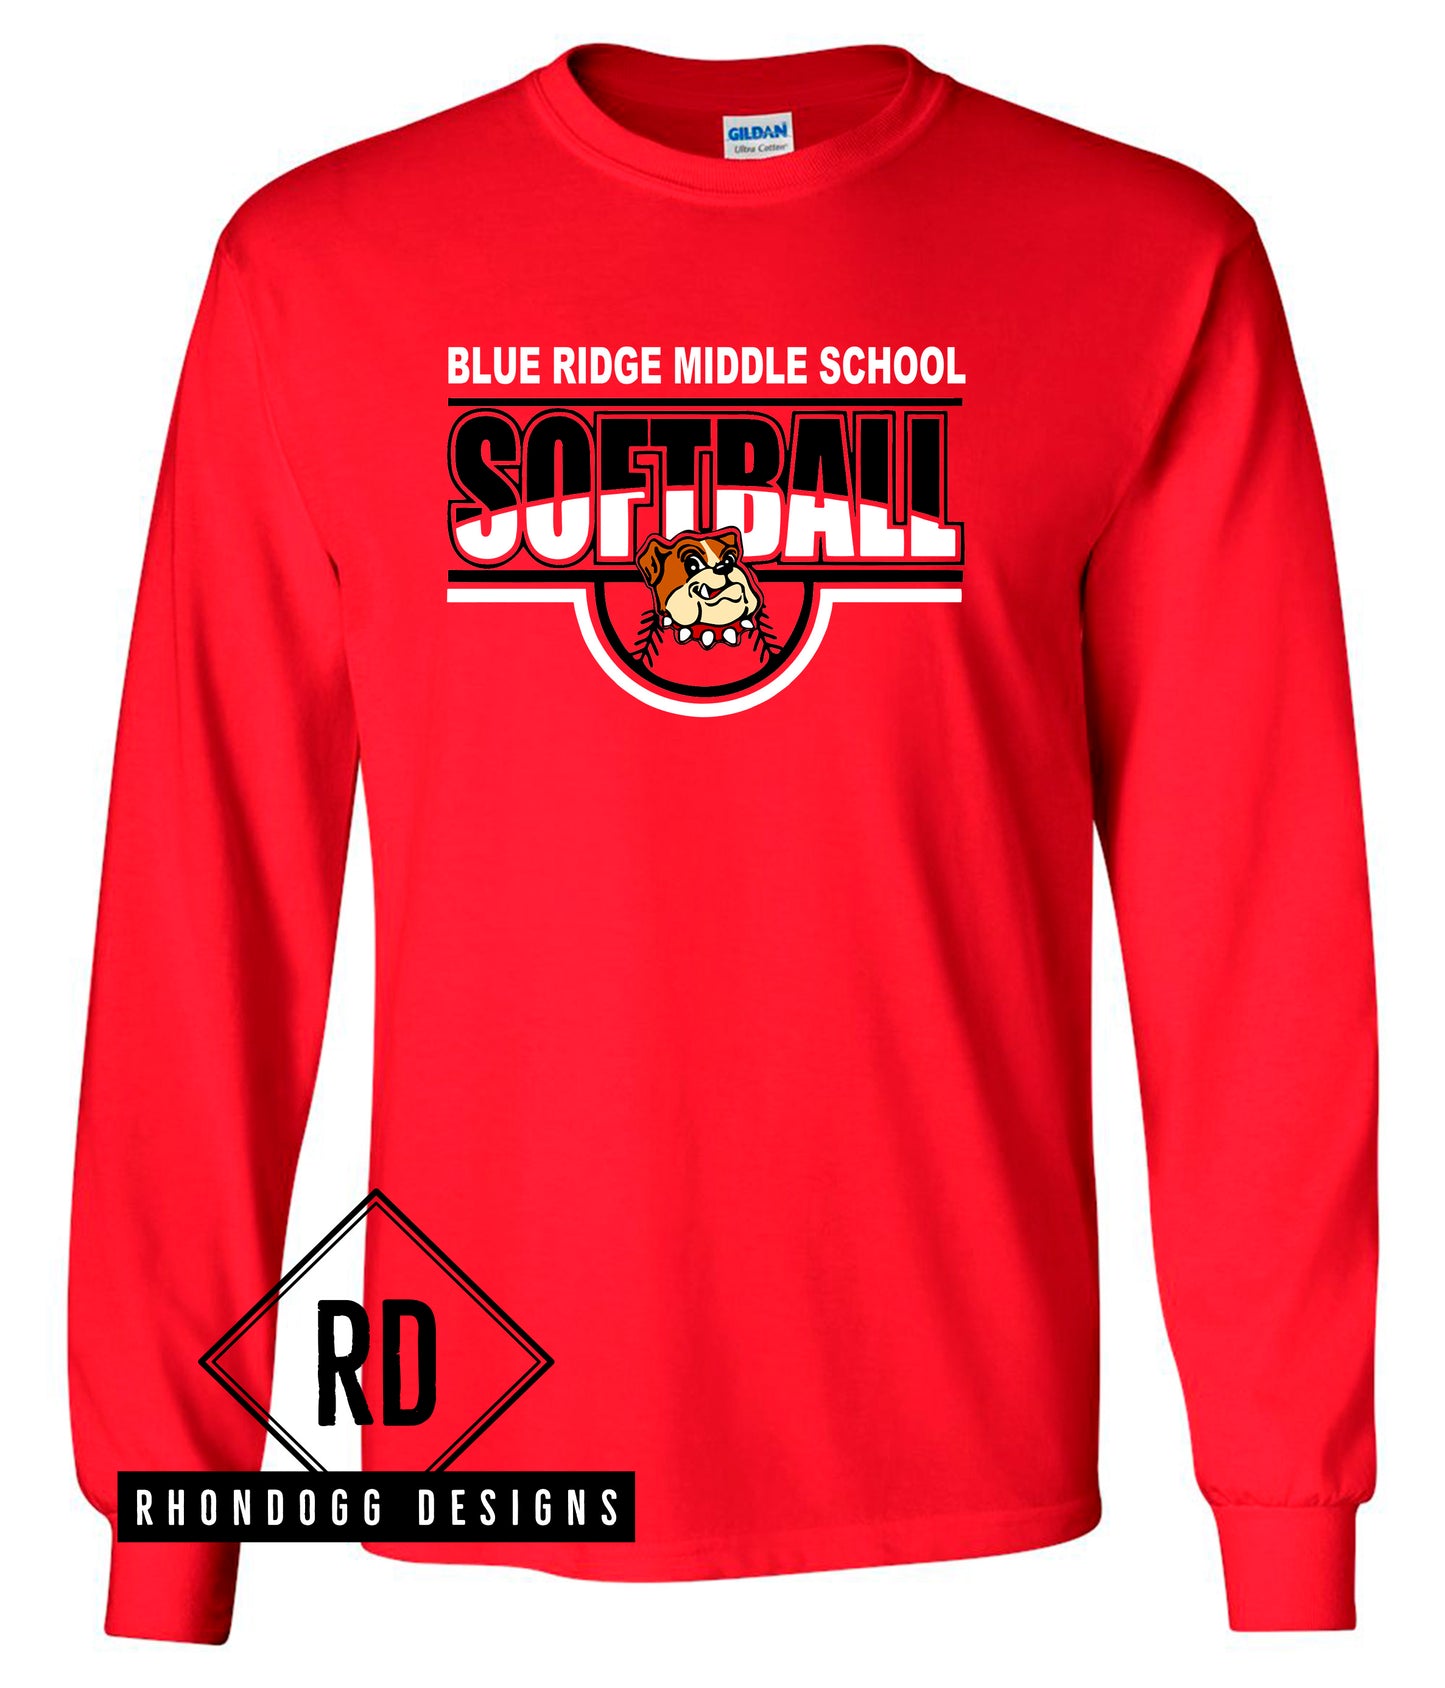 Blue Ridge Bulldog Middle School Softball T-Shirt